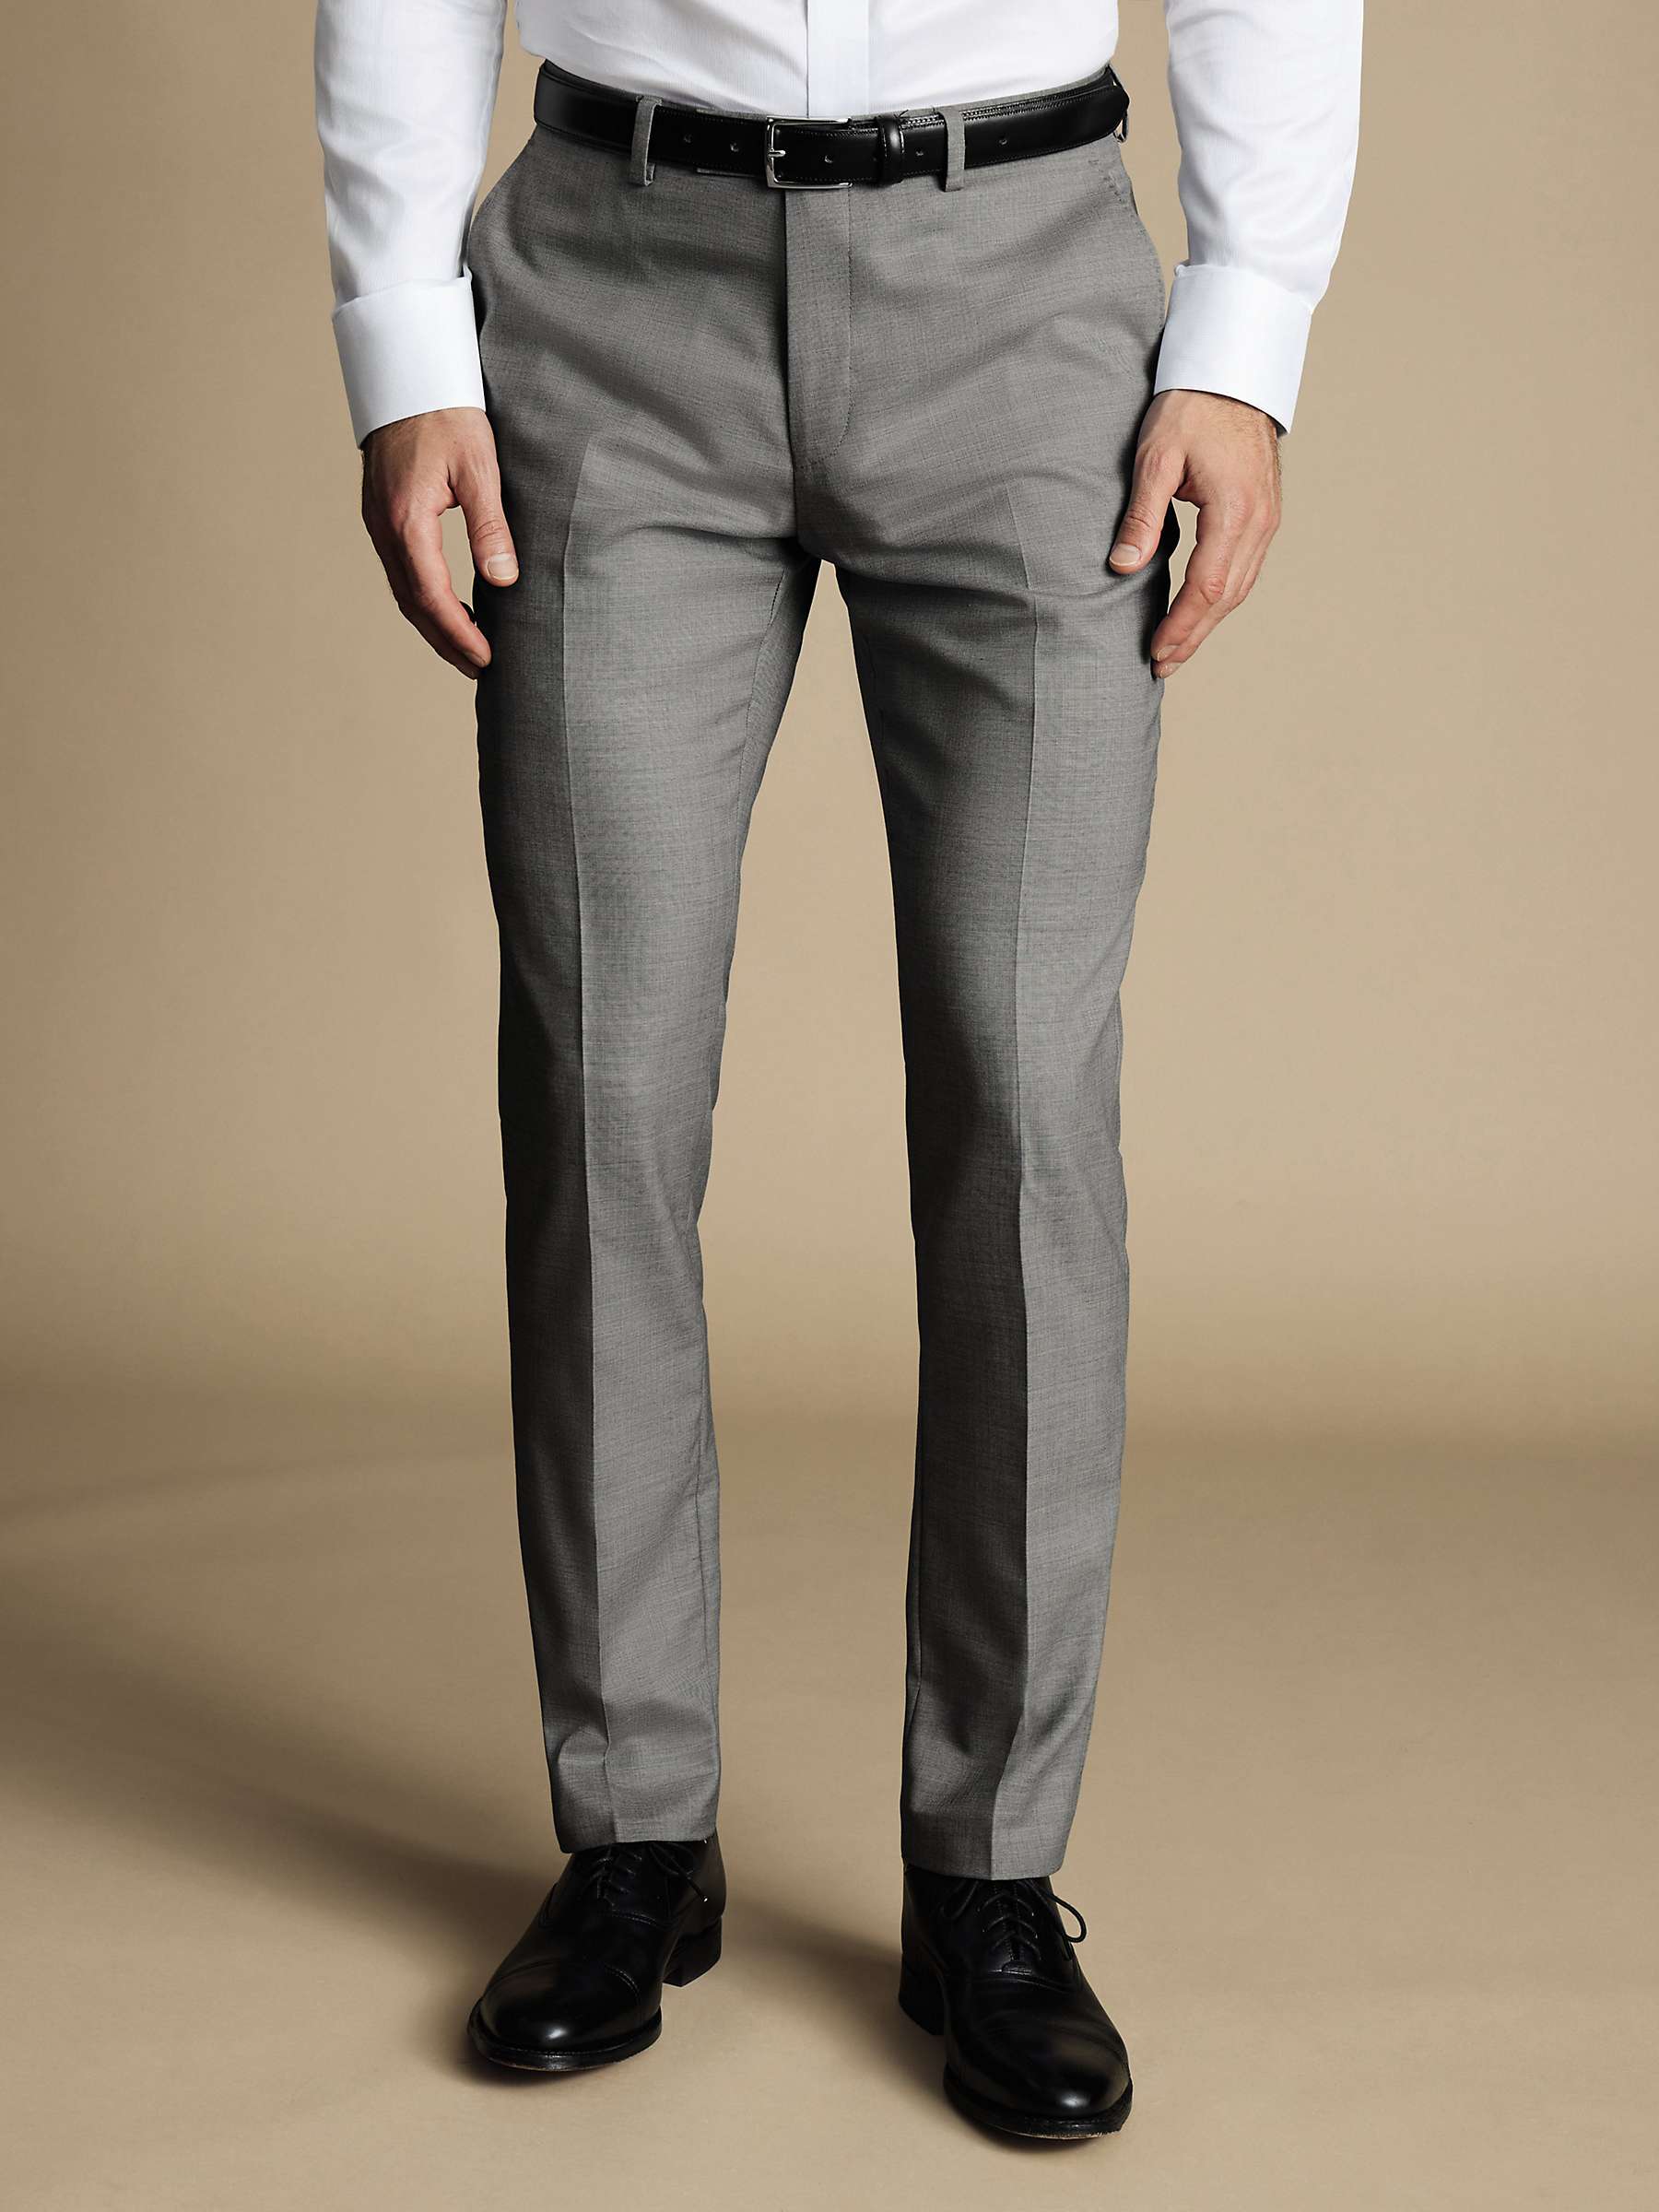 Buy Charles Tyrwhitt Sharkskin Ultimate Performance Slim Fit Suit Trousers Online at johnlewis.com